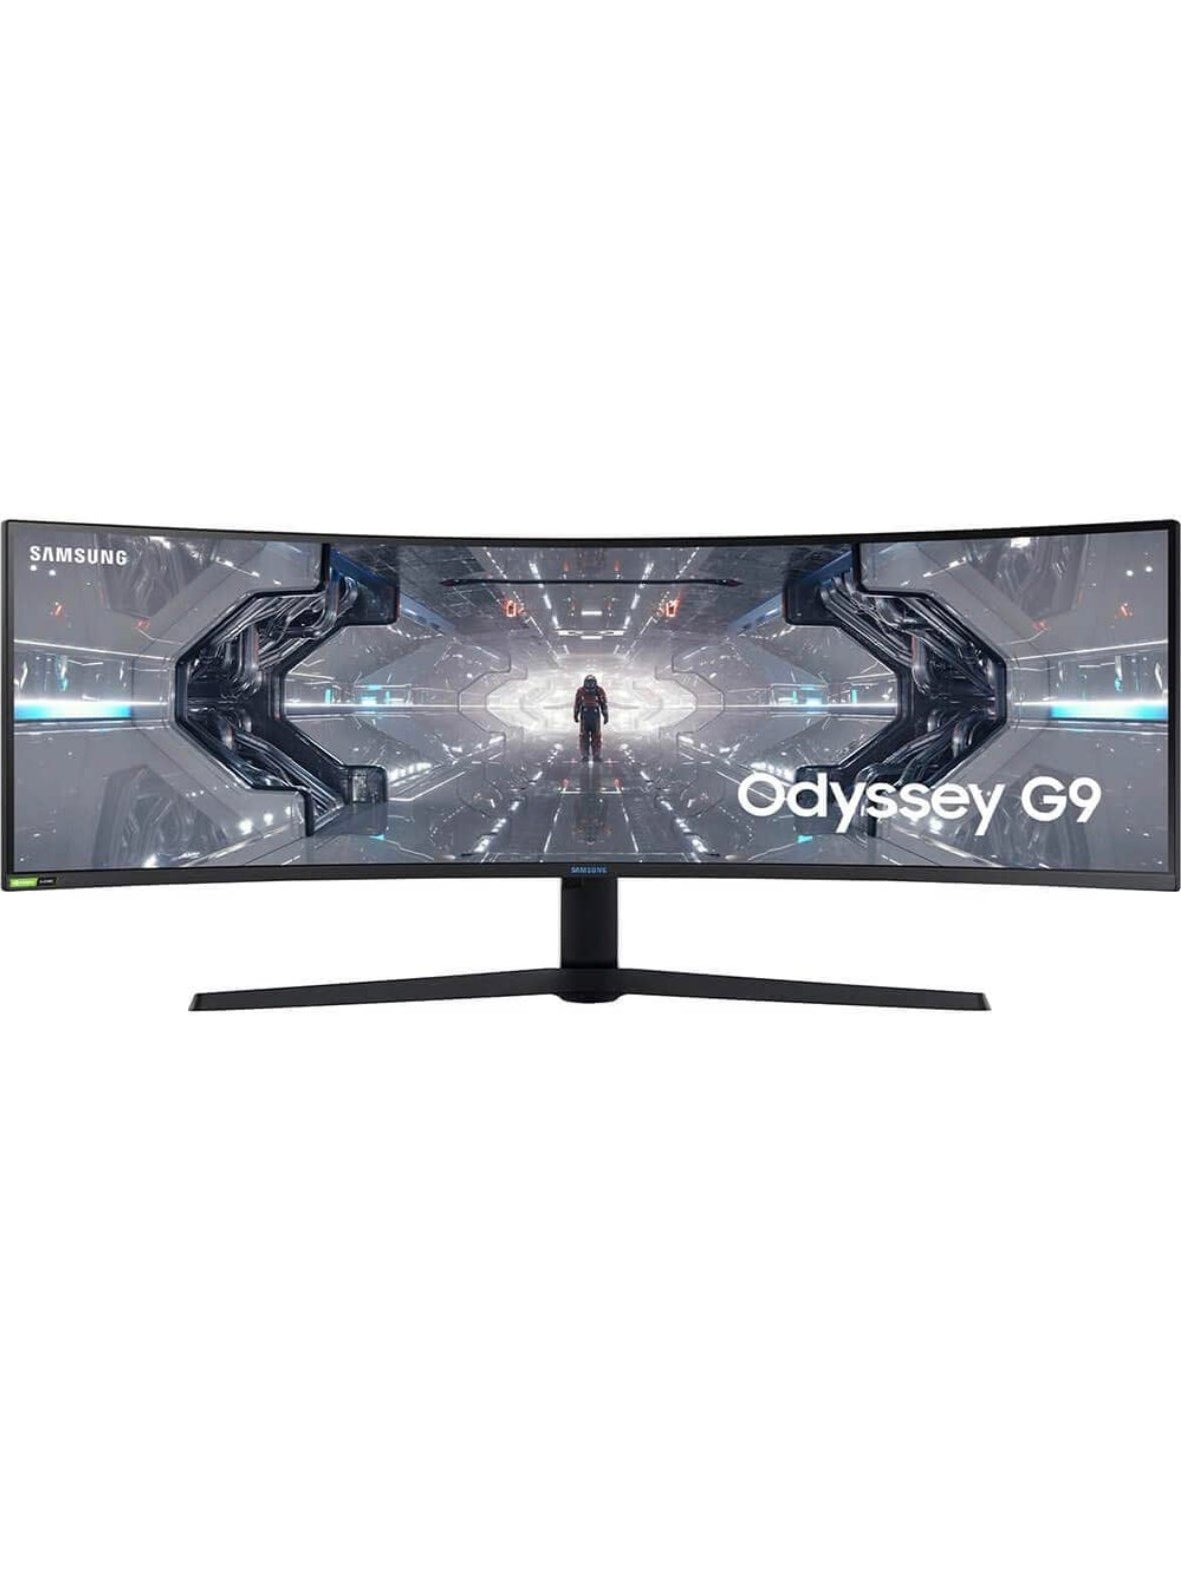 SAMSUNG 49” Odyssey G9 Gaming Monitor, 1000R Curved Screen, QLED, Dual QHD Display, 240Hz, NVIDIA G-SYNC and FreeSync Premium Pro, LC49G95TSSNXZA, White